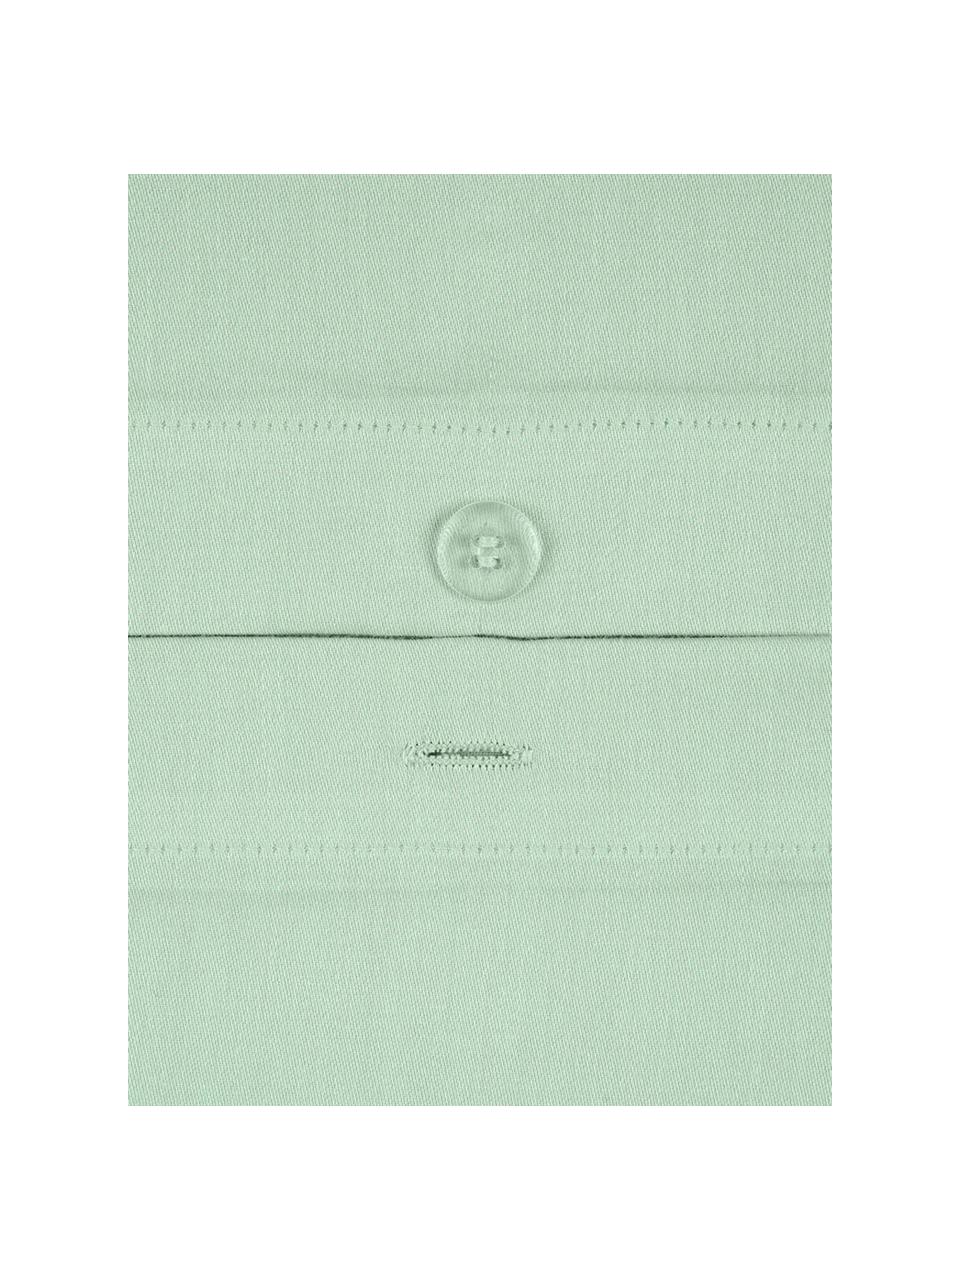 Baumwollsatin-Kissenbezug Comfort in Salbeigrün, 65 x 100 cm, Webart: Satin, leicht glänzend Fa, Salbeigrün, B 65 x L 100 cm